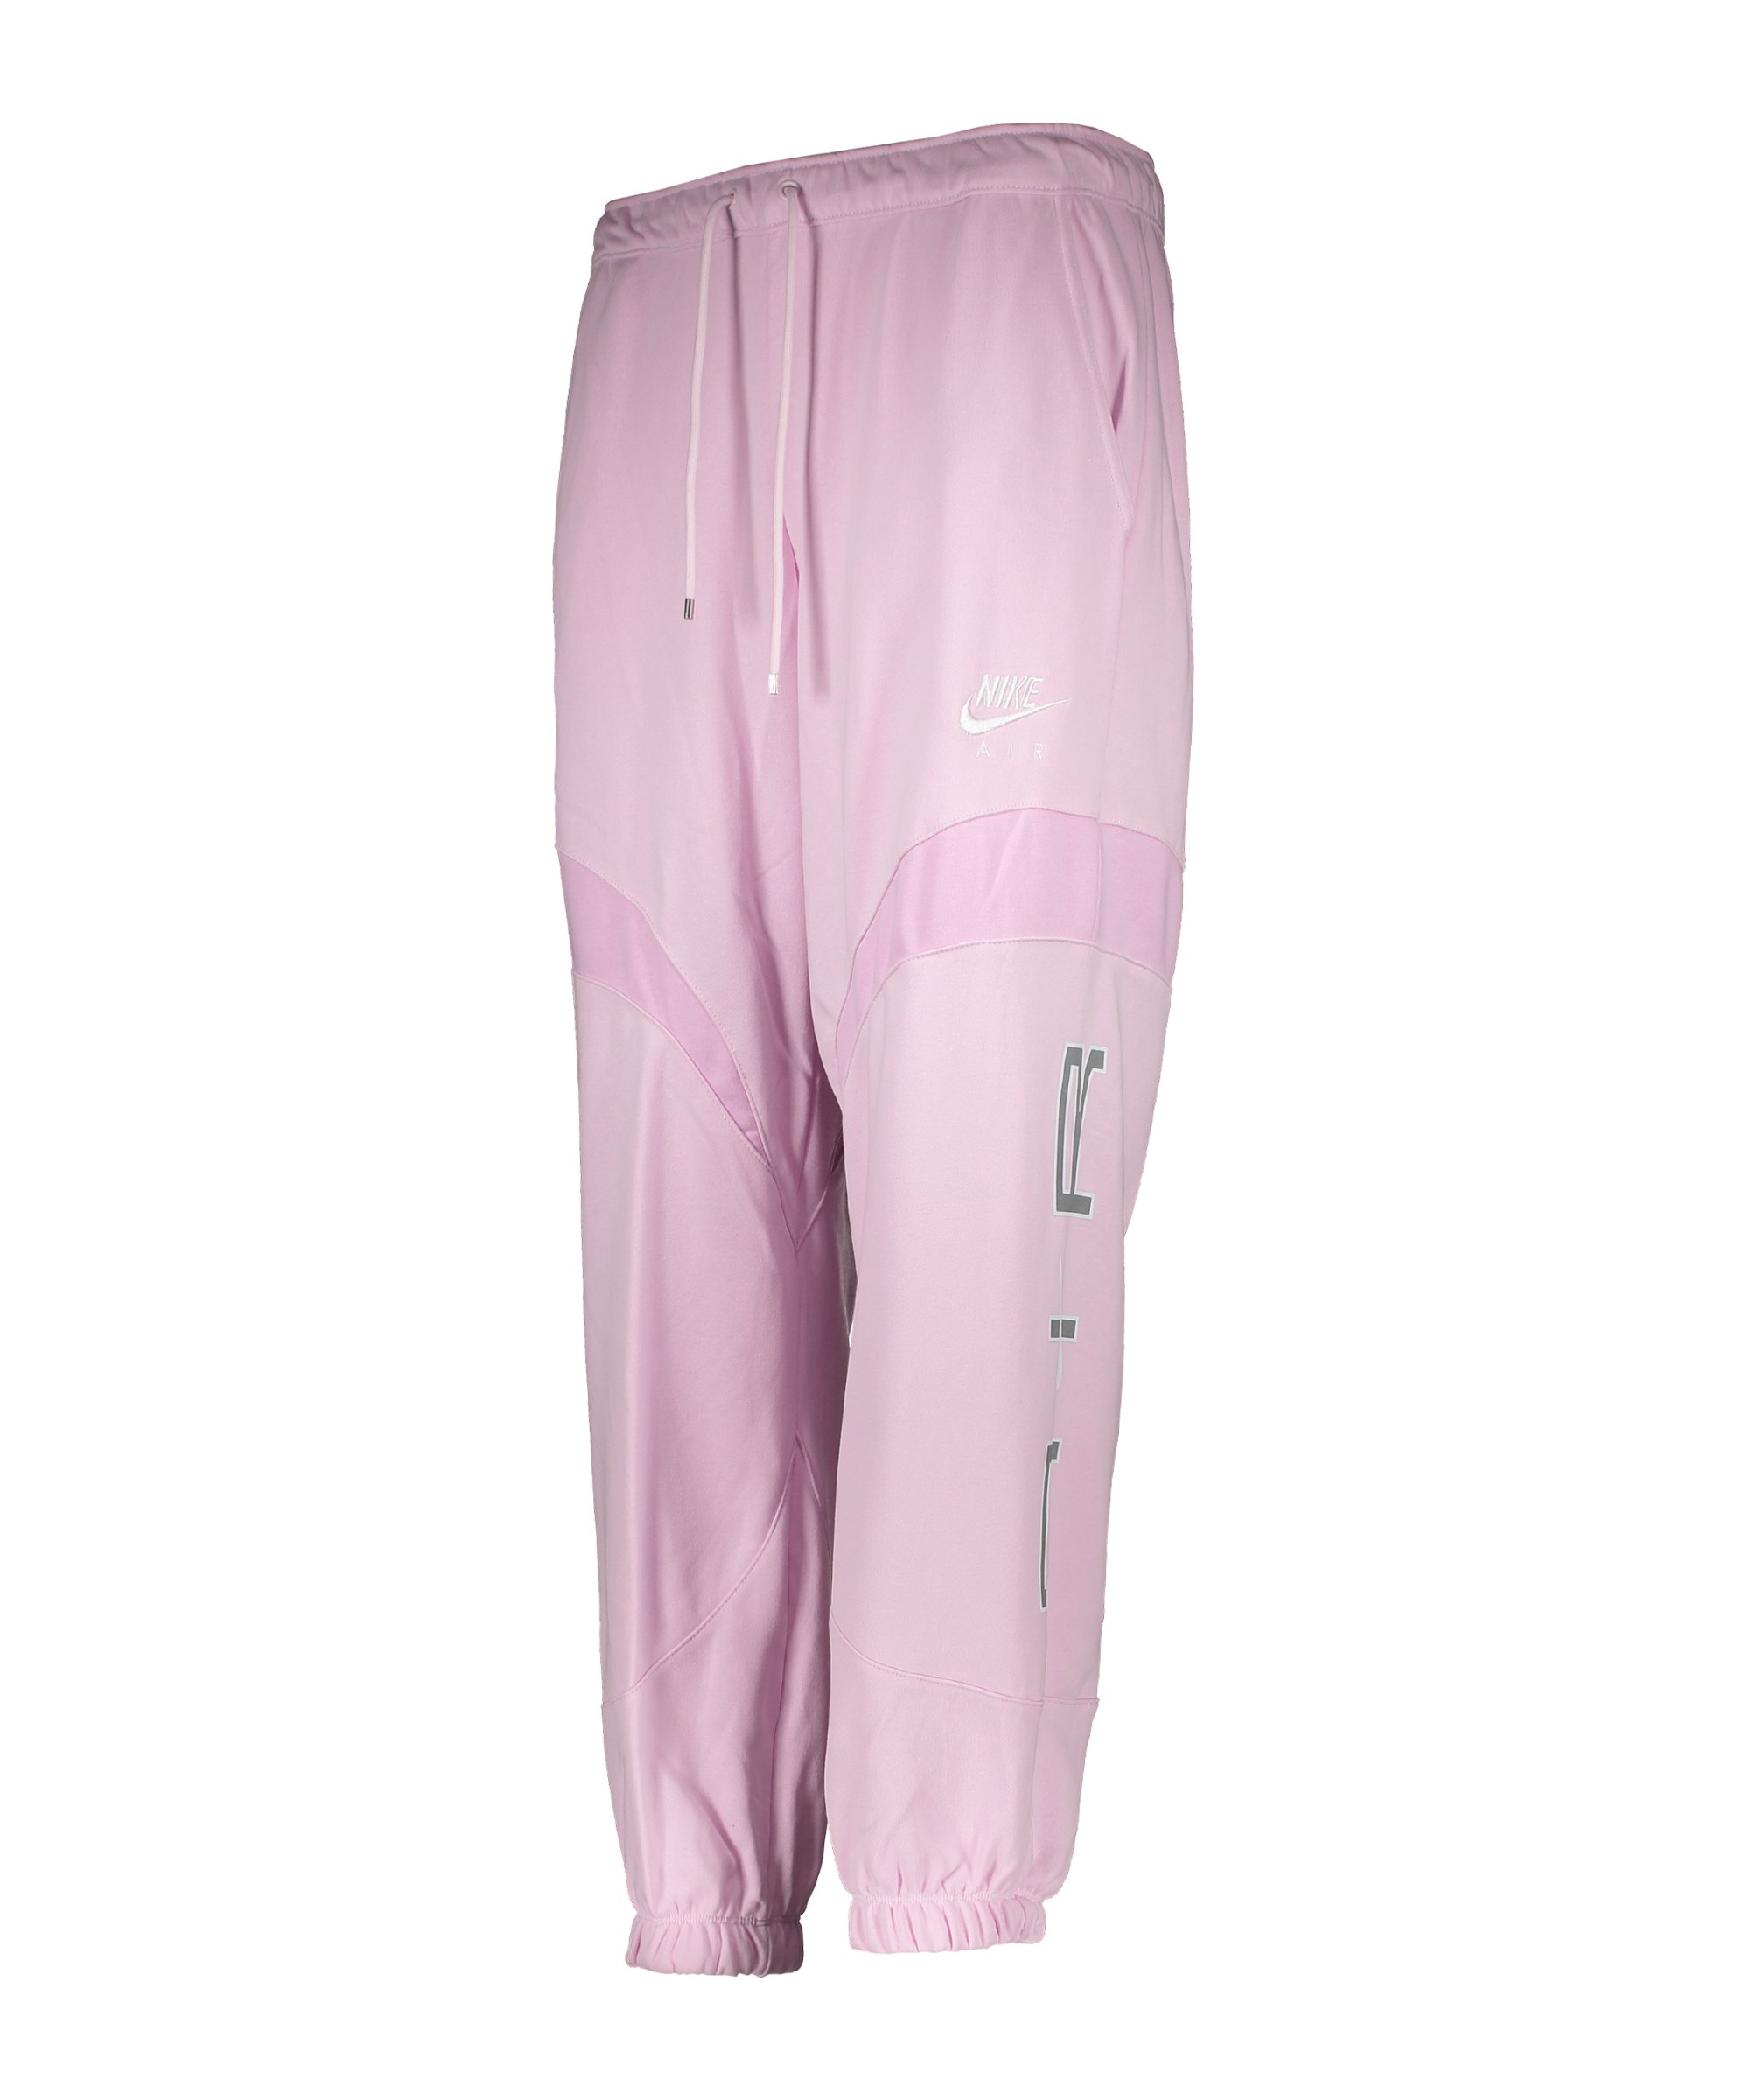 Nike Air Jogginghose Damen Pink F695 - pink